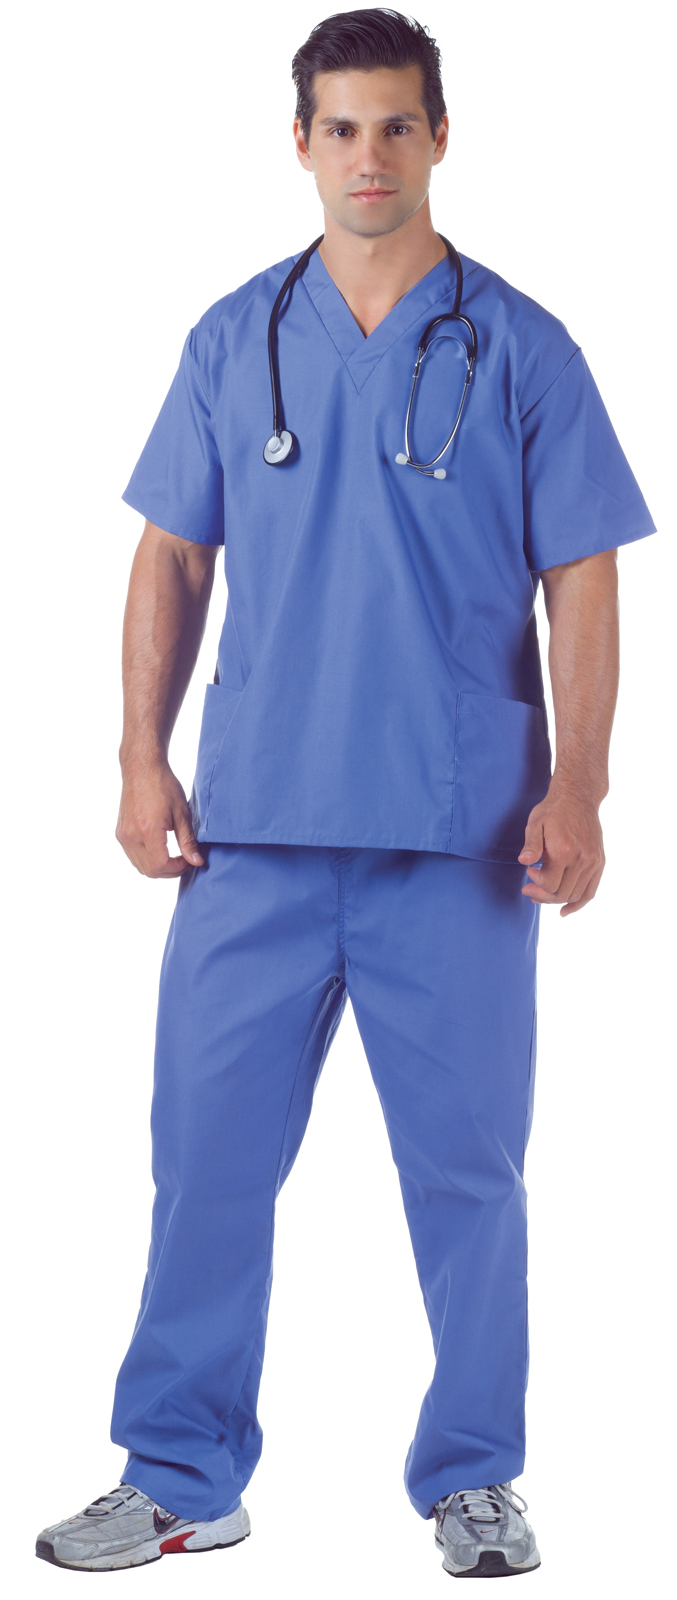 Underwraps Carnival Corp. Men's Hospital Scrubs Adult Costume - Blue - One-Size